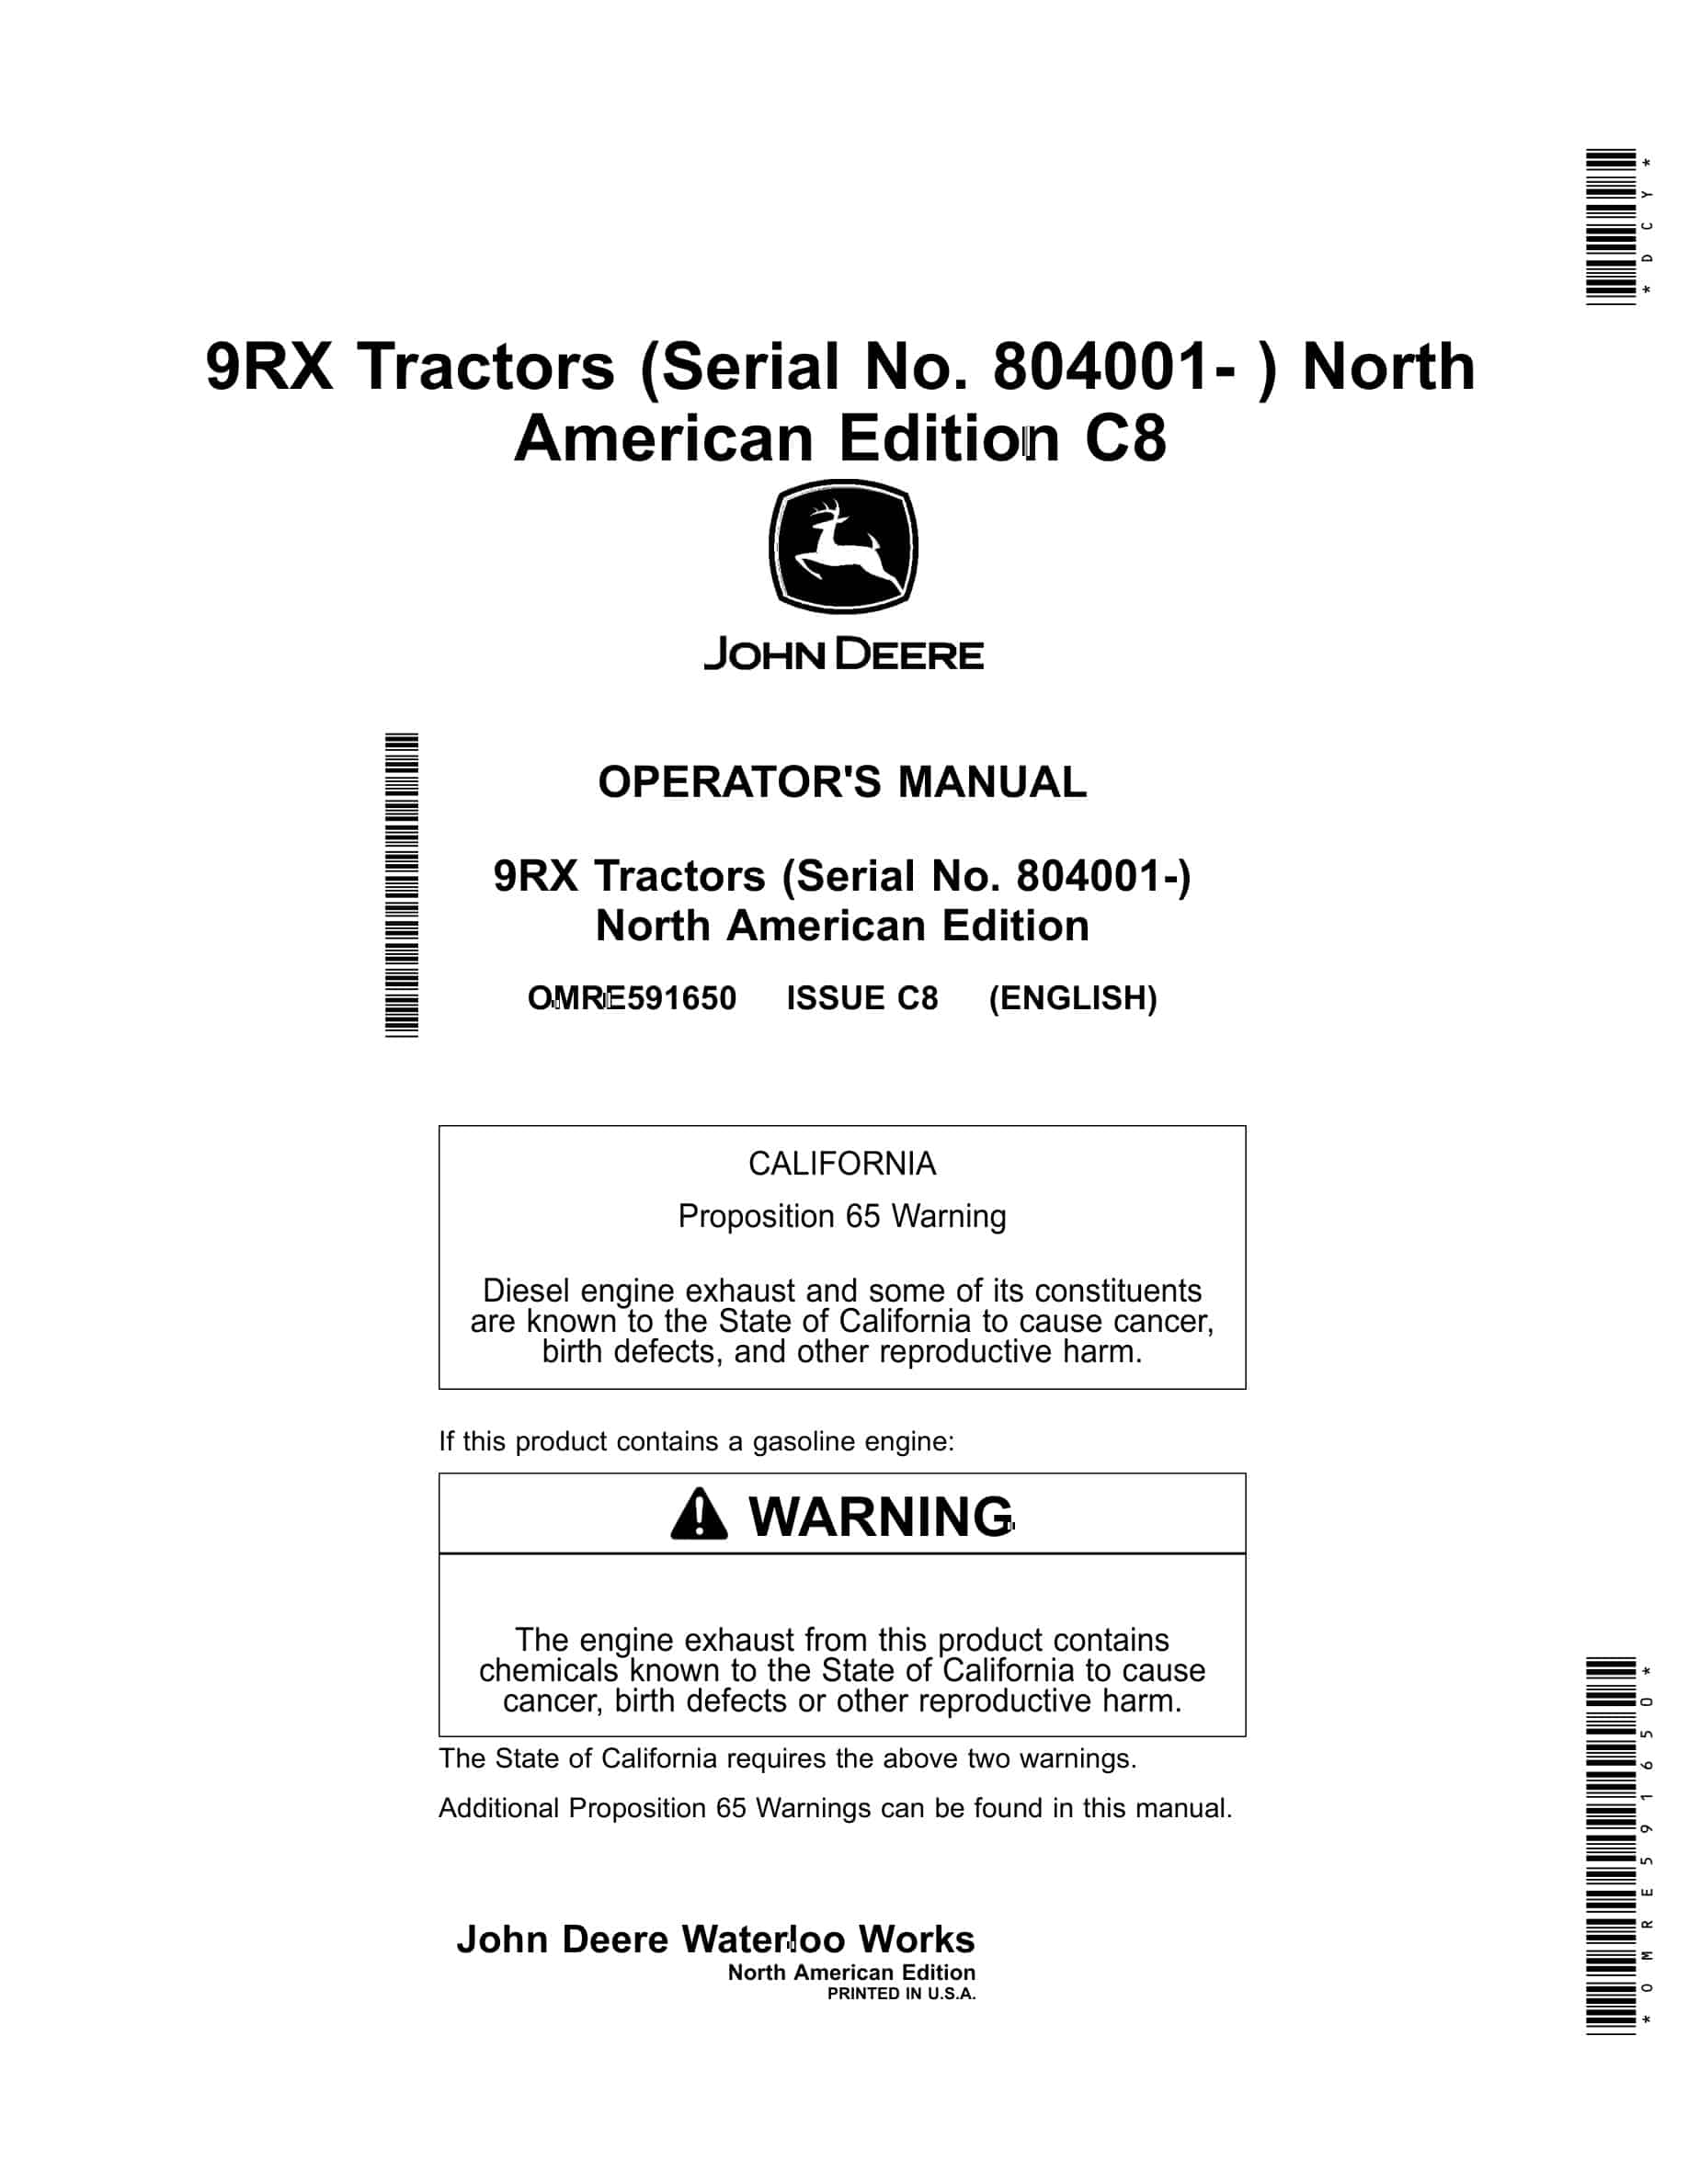 John Deere 9RX Tractor Operator Manual OMRE591650-1